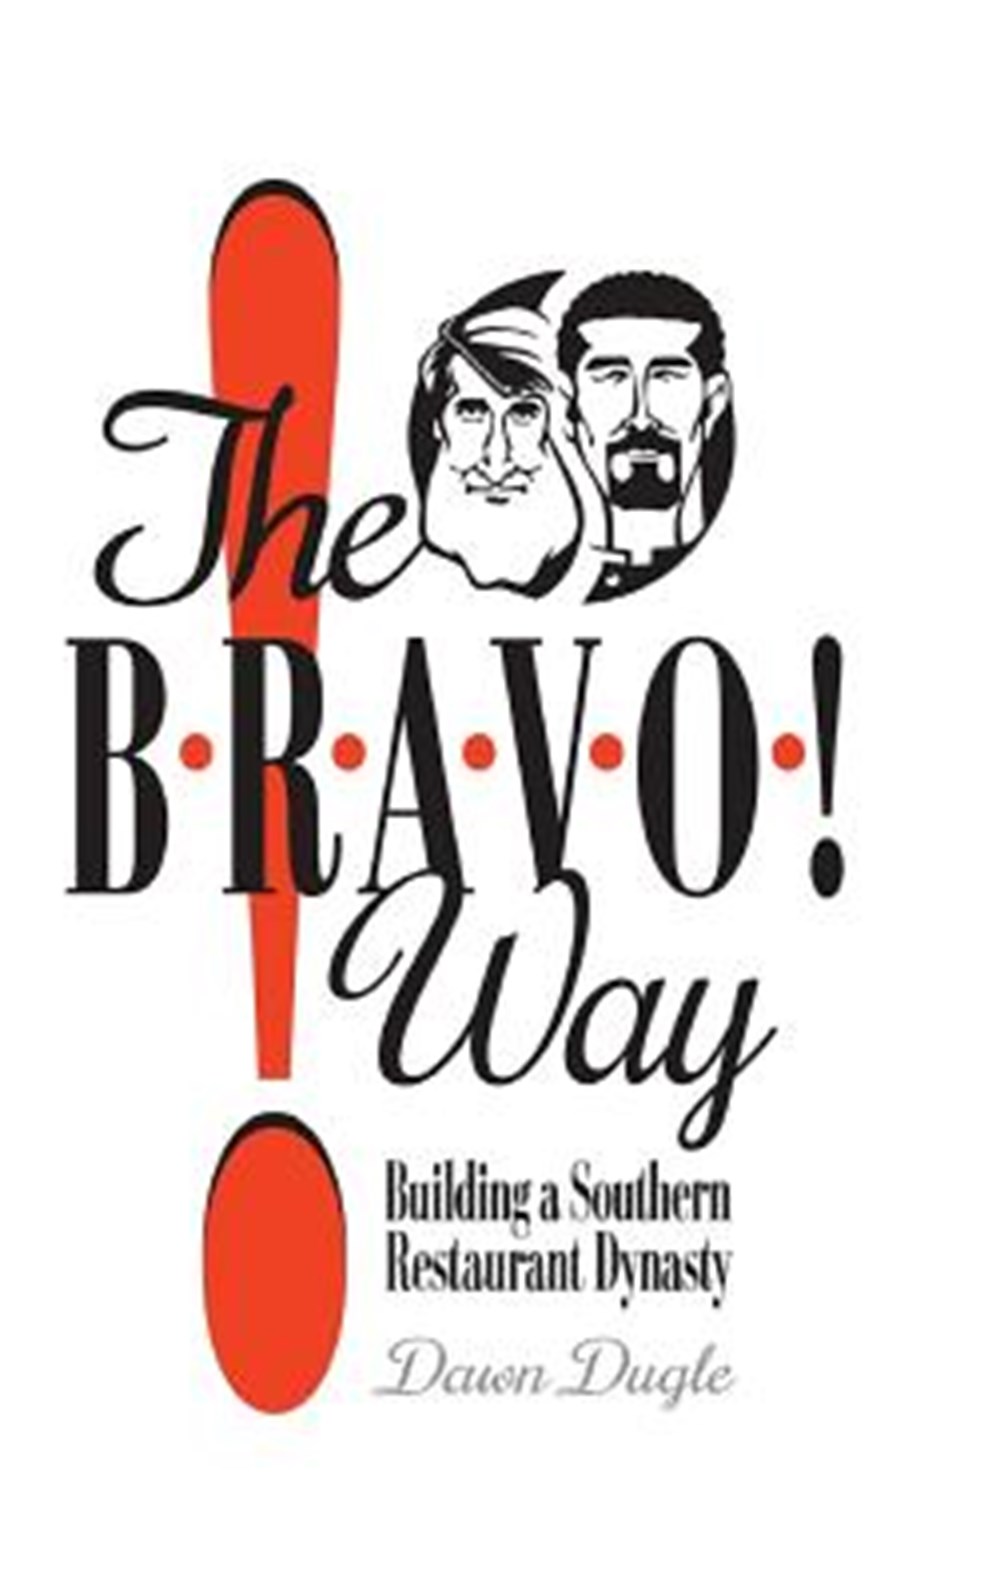 Bravo! Way Building a Southern Restaurant Dynasty